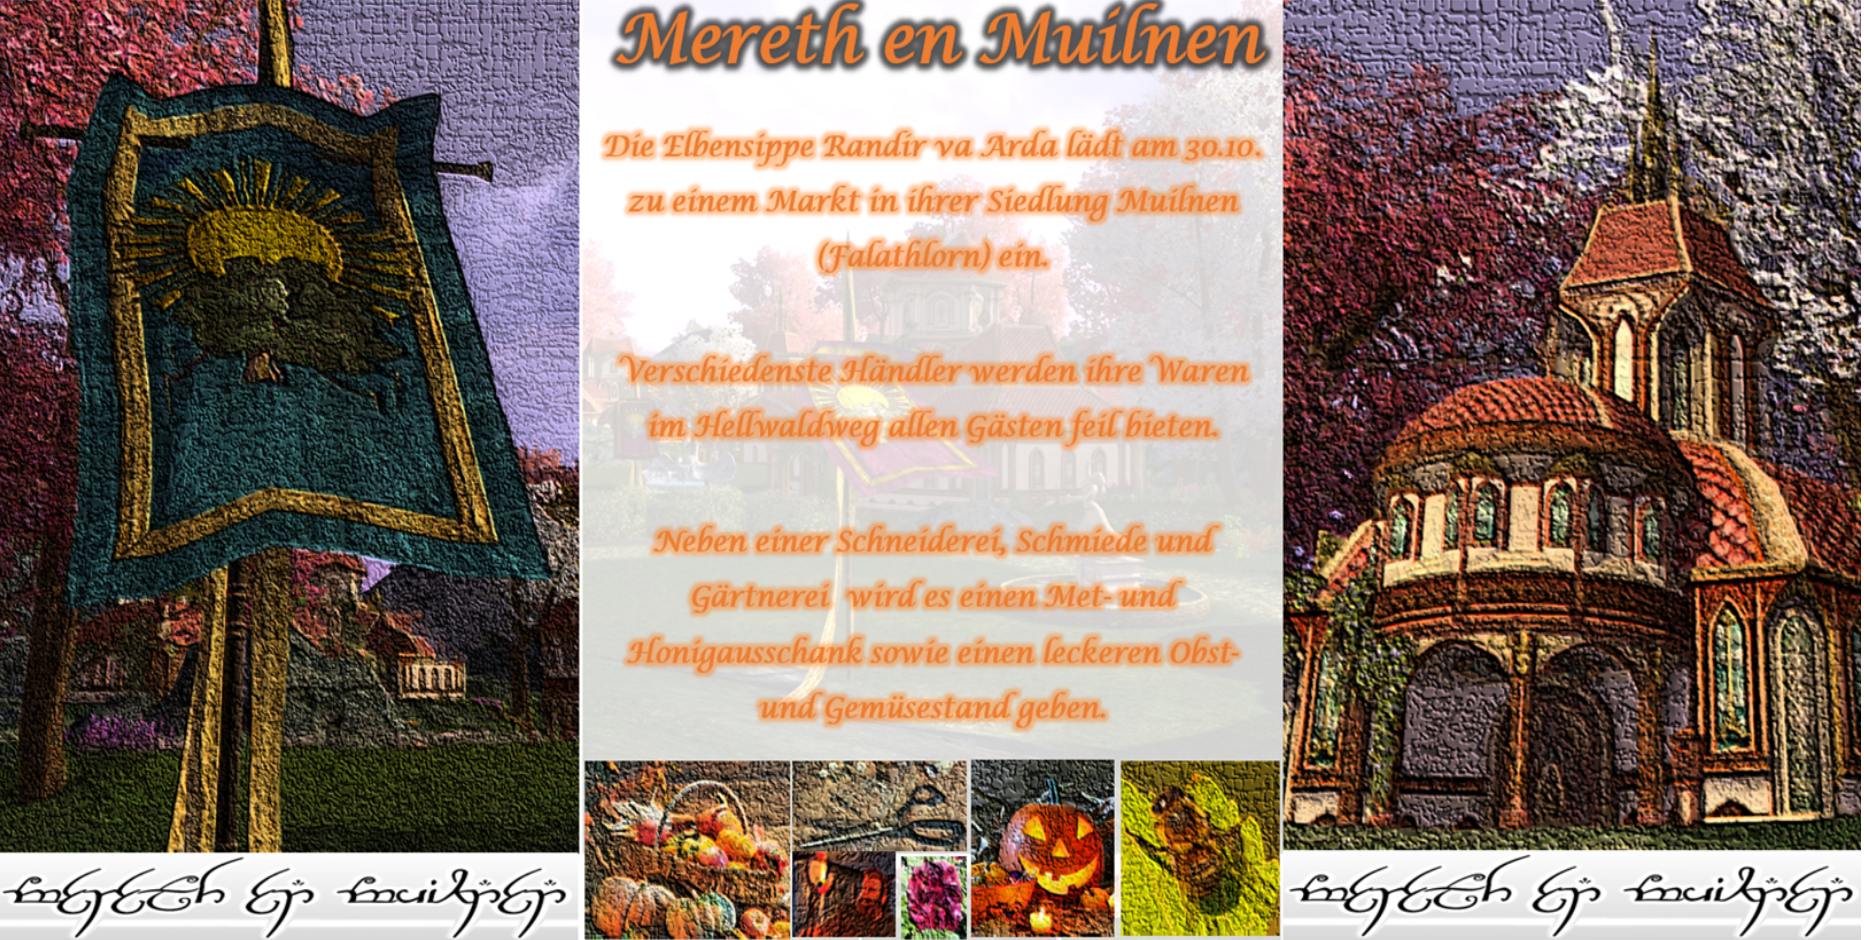 Einladung Markt Melreth en Muilnen_Herbst 2019.png